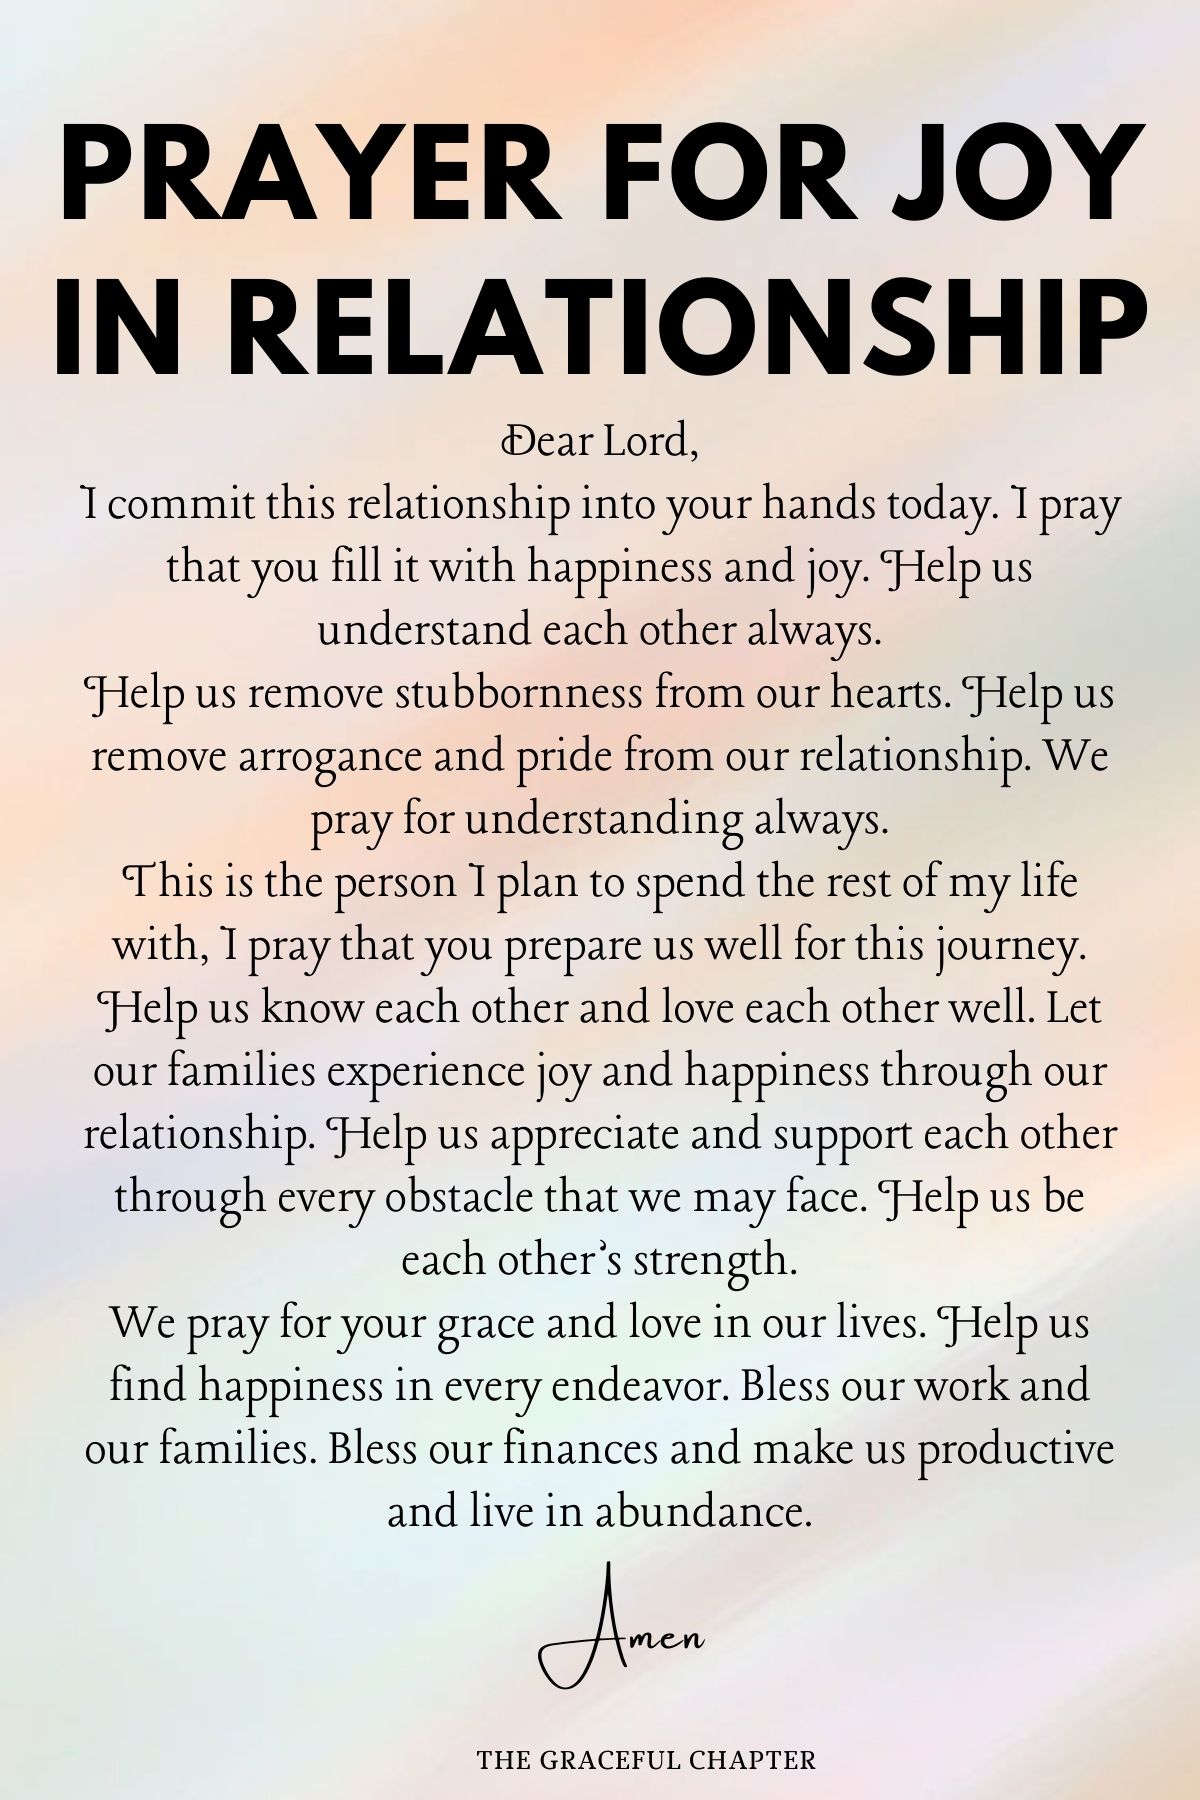 Prayers for Joy in Relationship